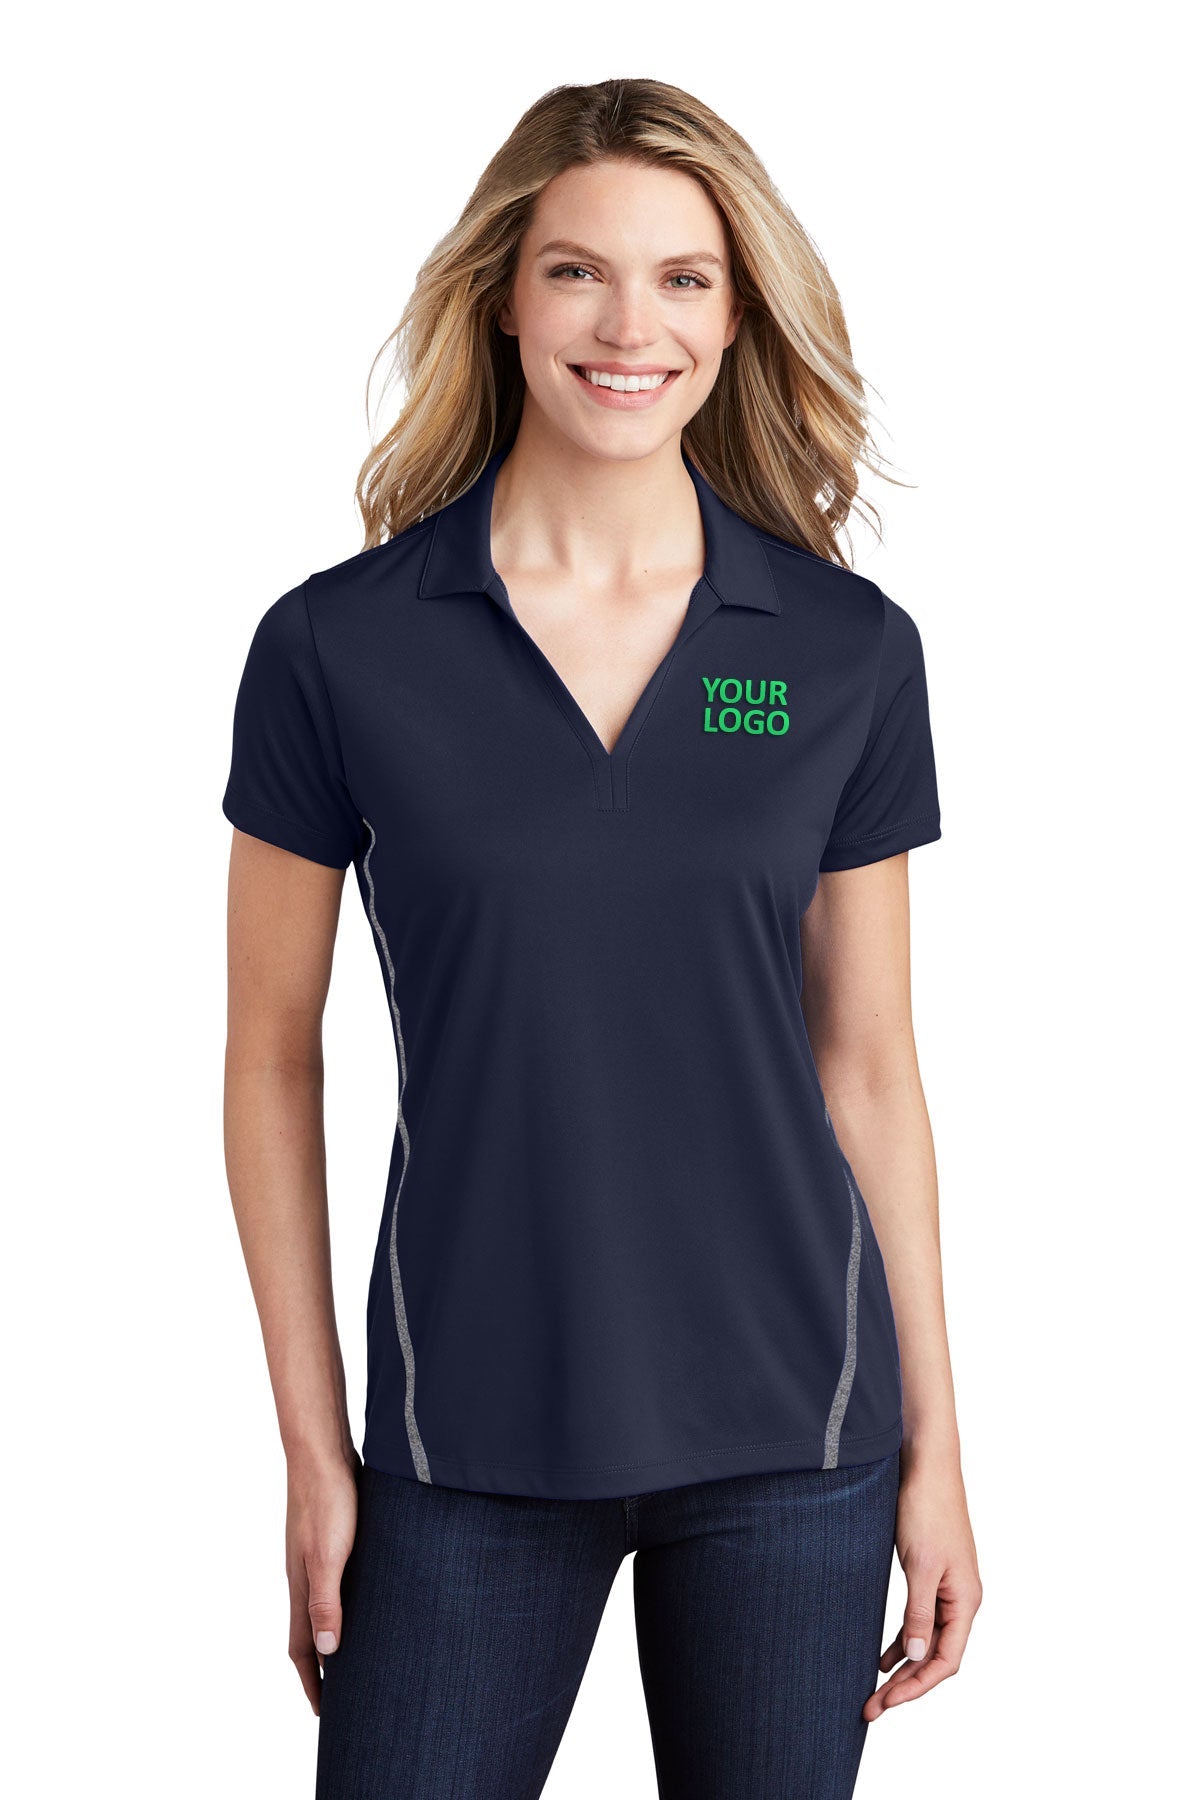 Sport-Tek True Navy/ Heather Grey LST620 custom dry fit polo shirts